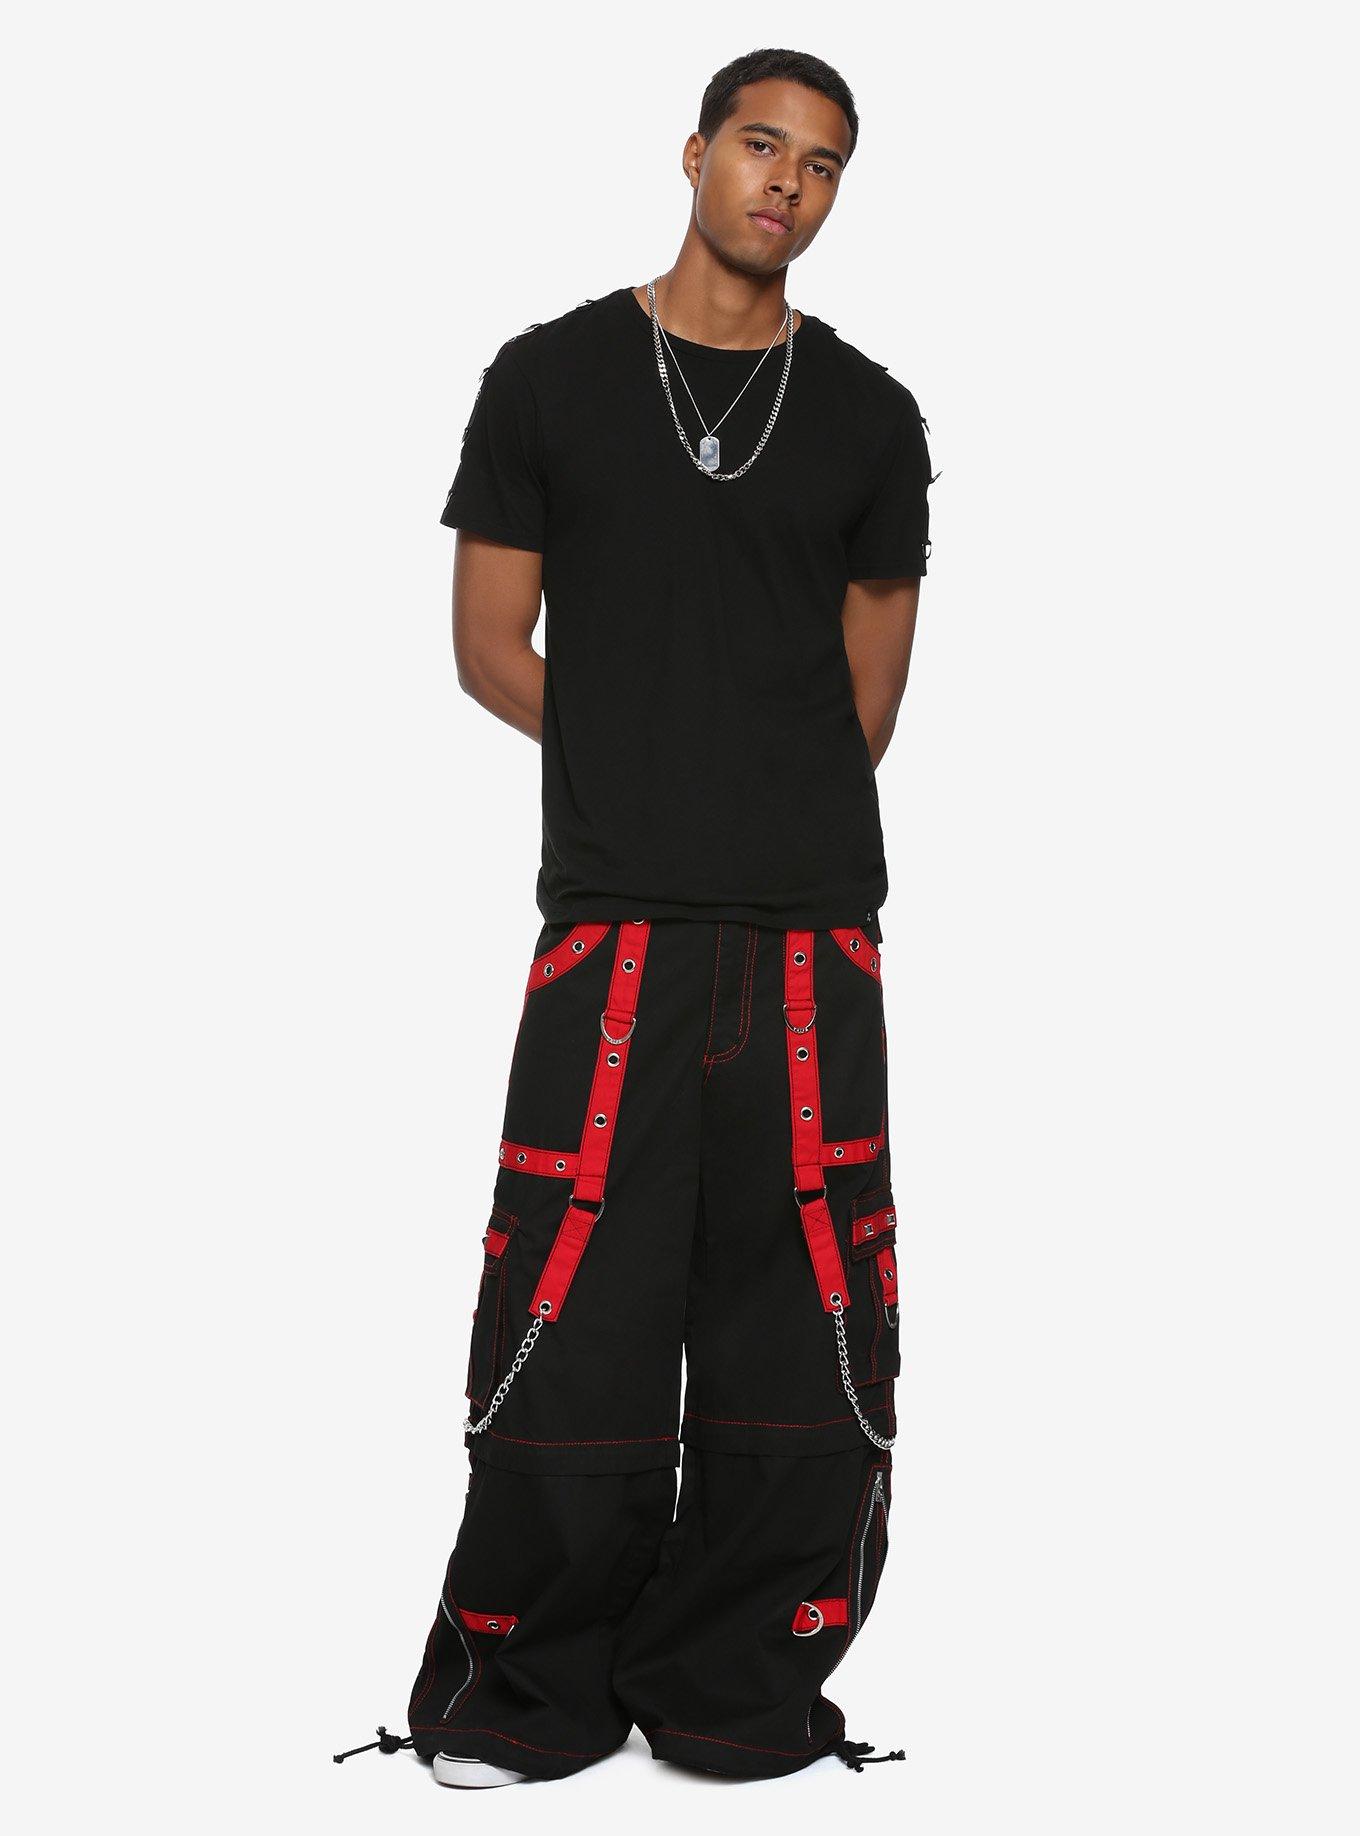 Tripp Black & Red Chain Zip-Off Pants, , alternate